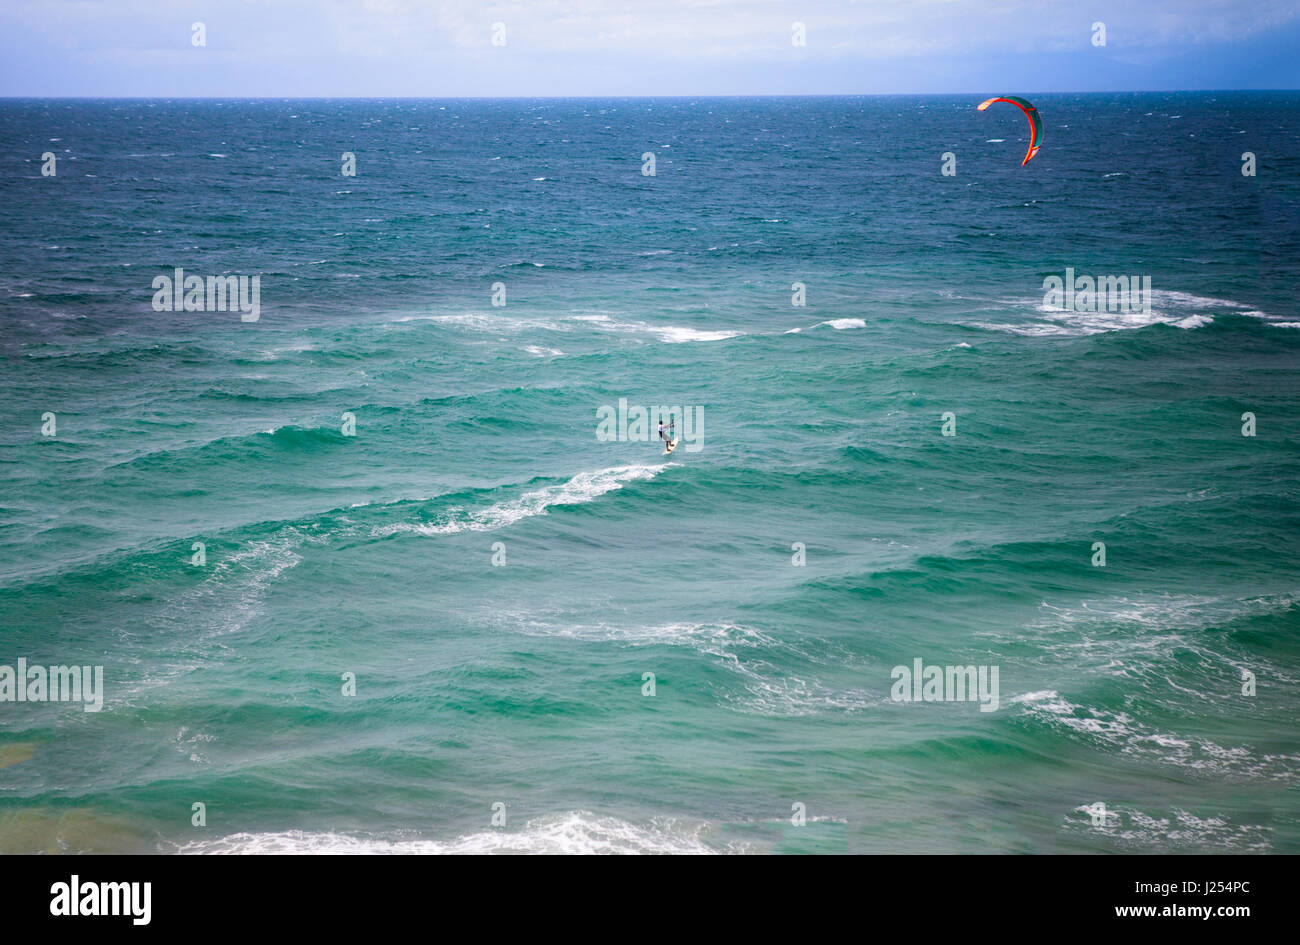 kite surfer surfing, extreme water sport Stock Photo